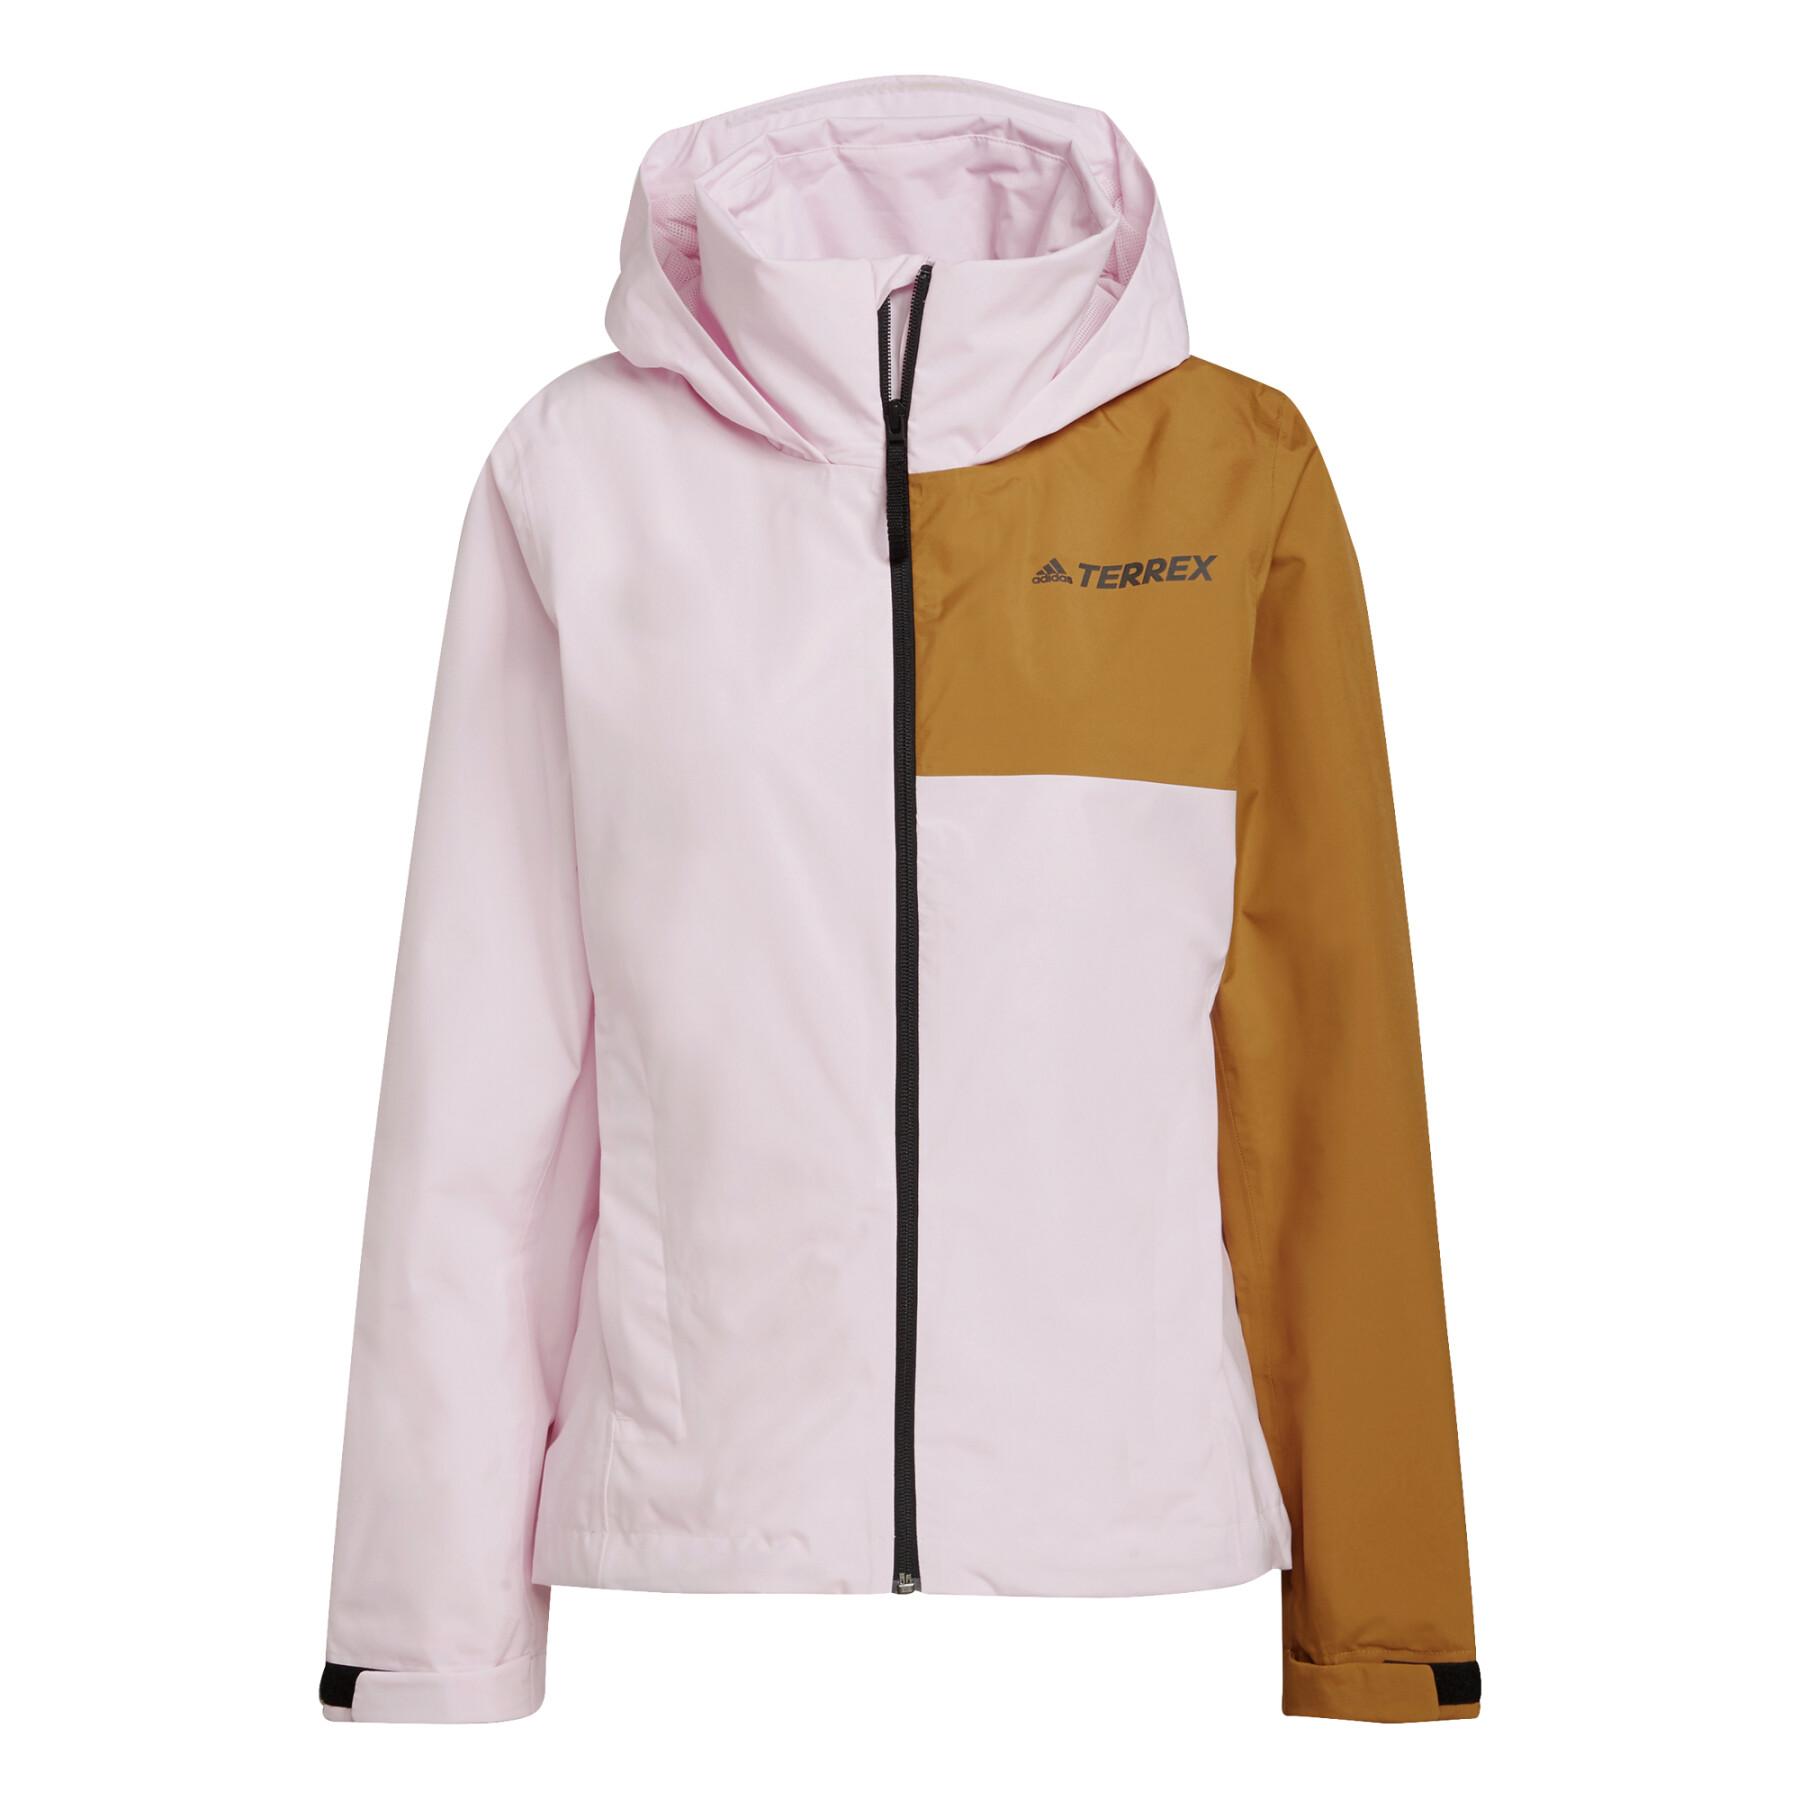 Two-Layer jacket Multi adidas Terrex waterproof Hiking Primegreen - - Jackets Clothing Women\'s -